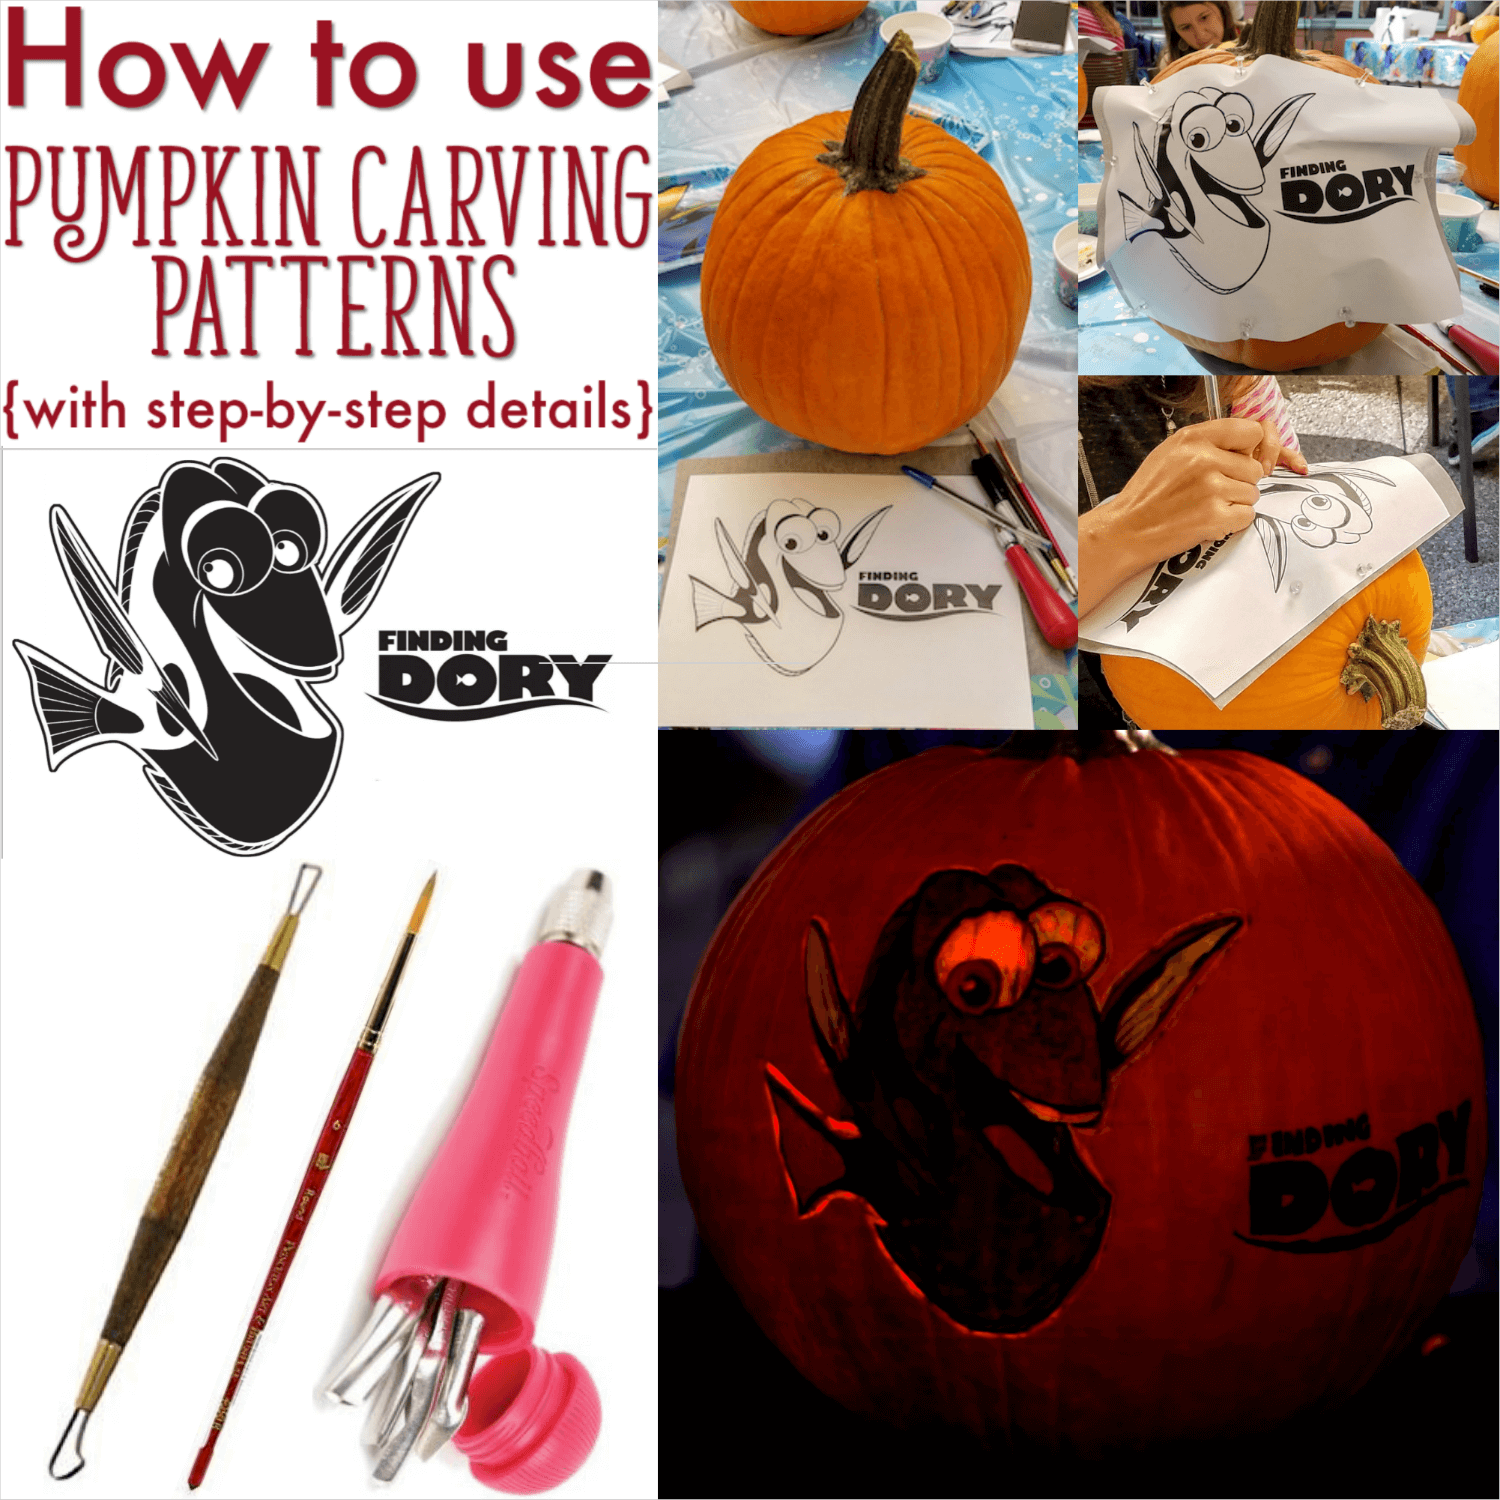 How do you use a pumpkin carving stencil?